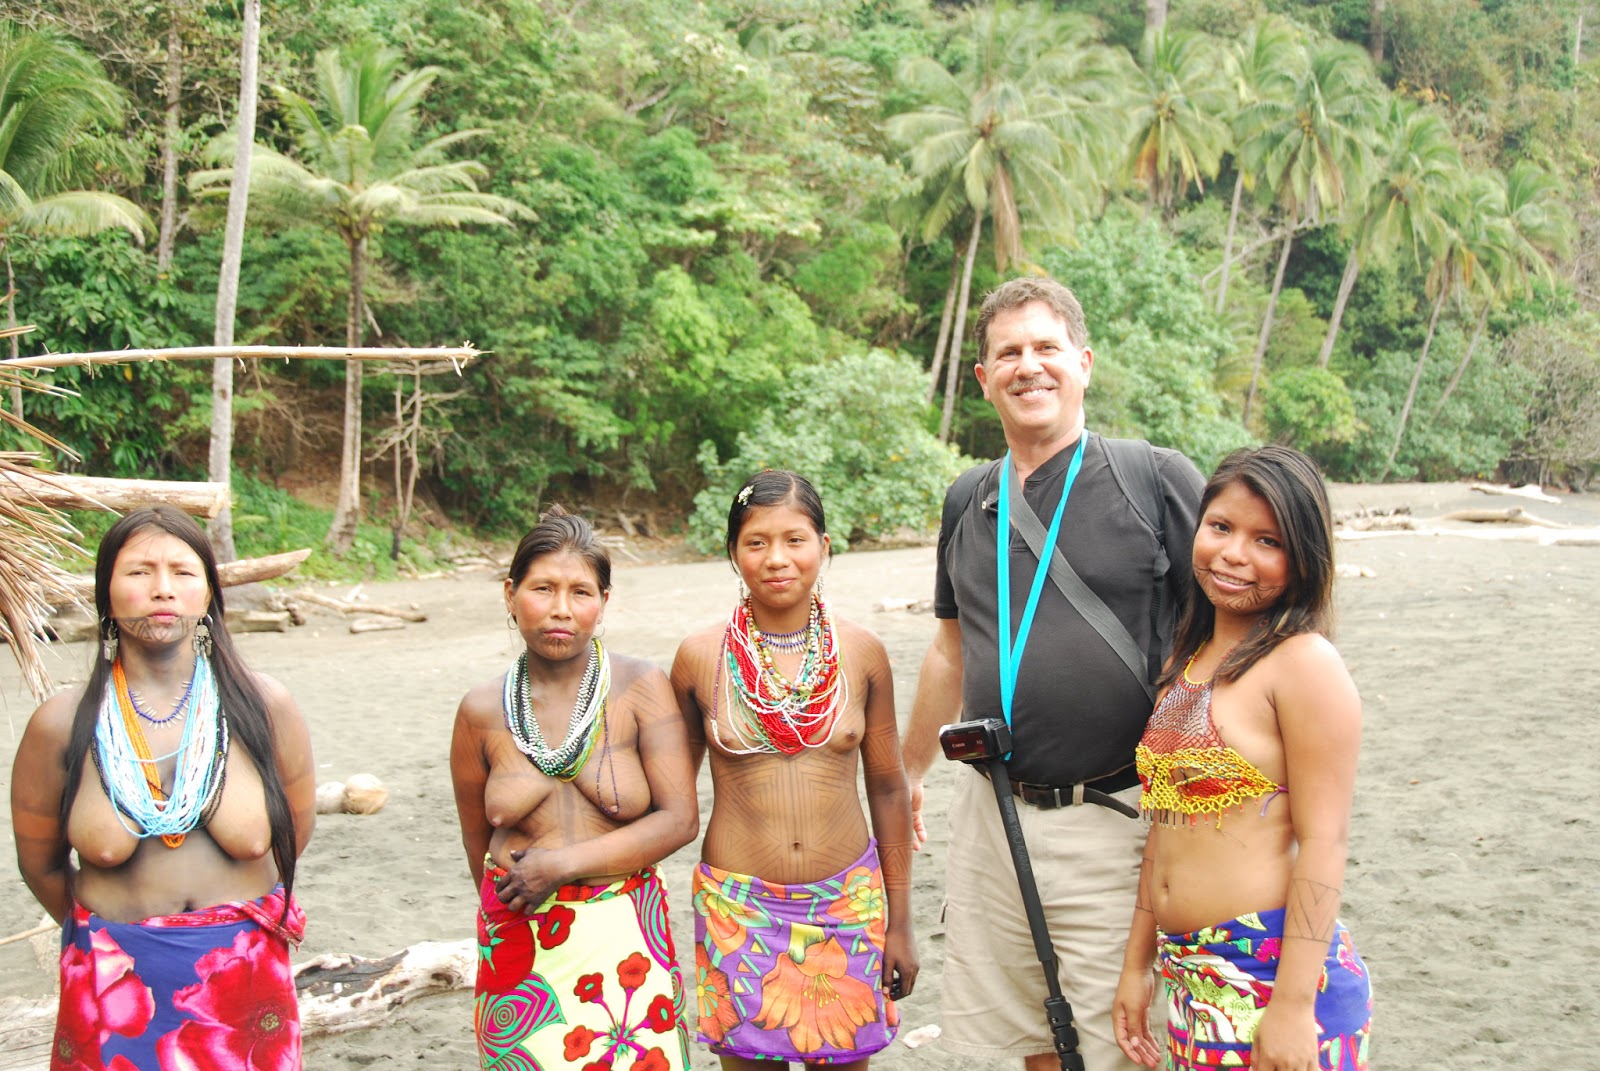 Costa Rica Tribes Girls Nude